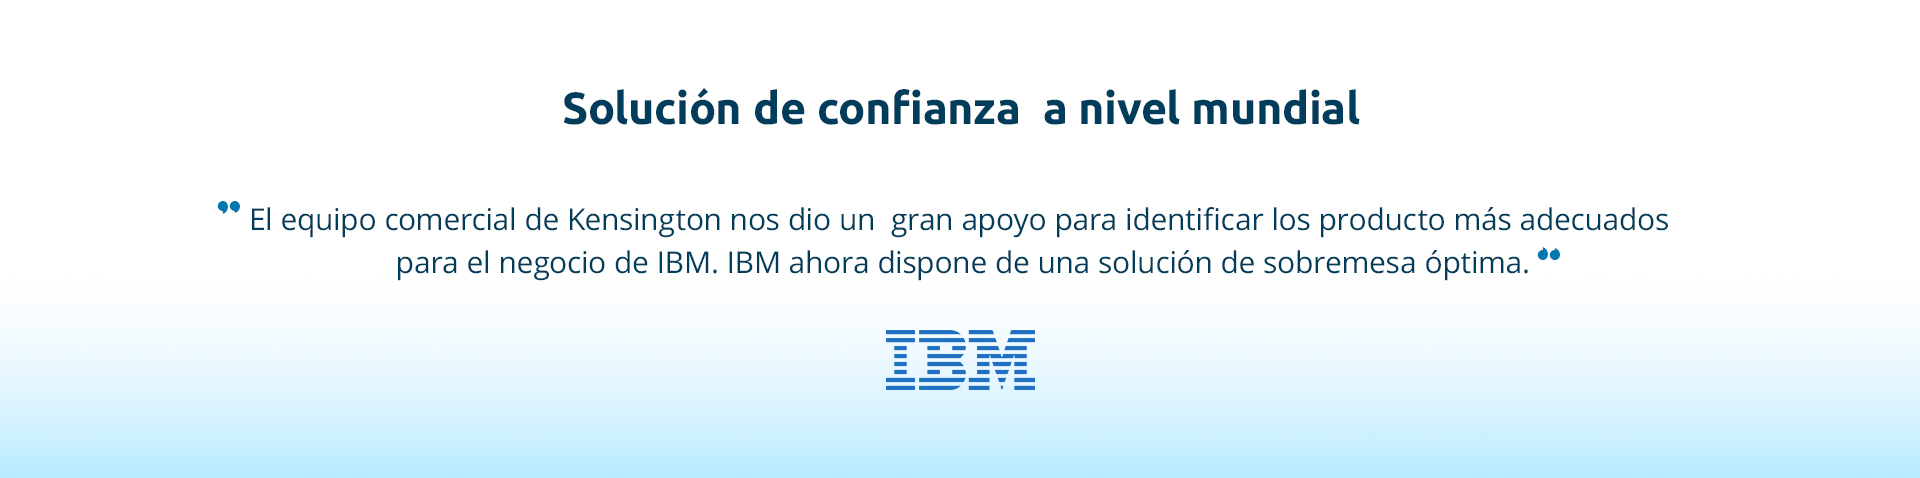 IBM quote